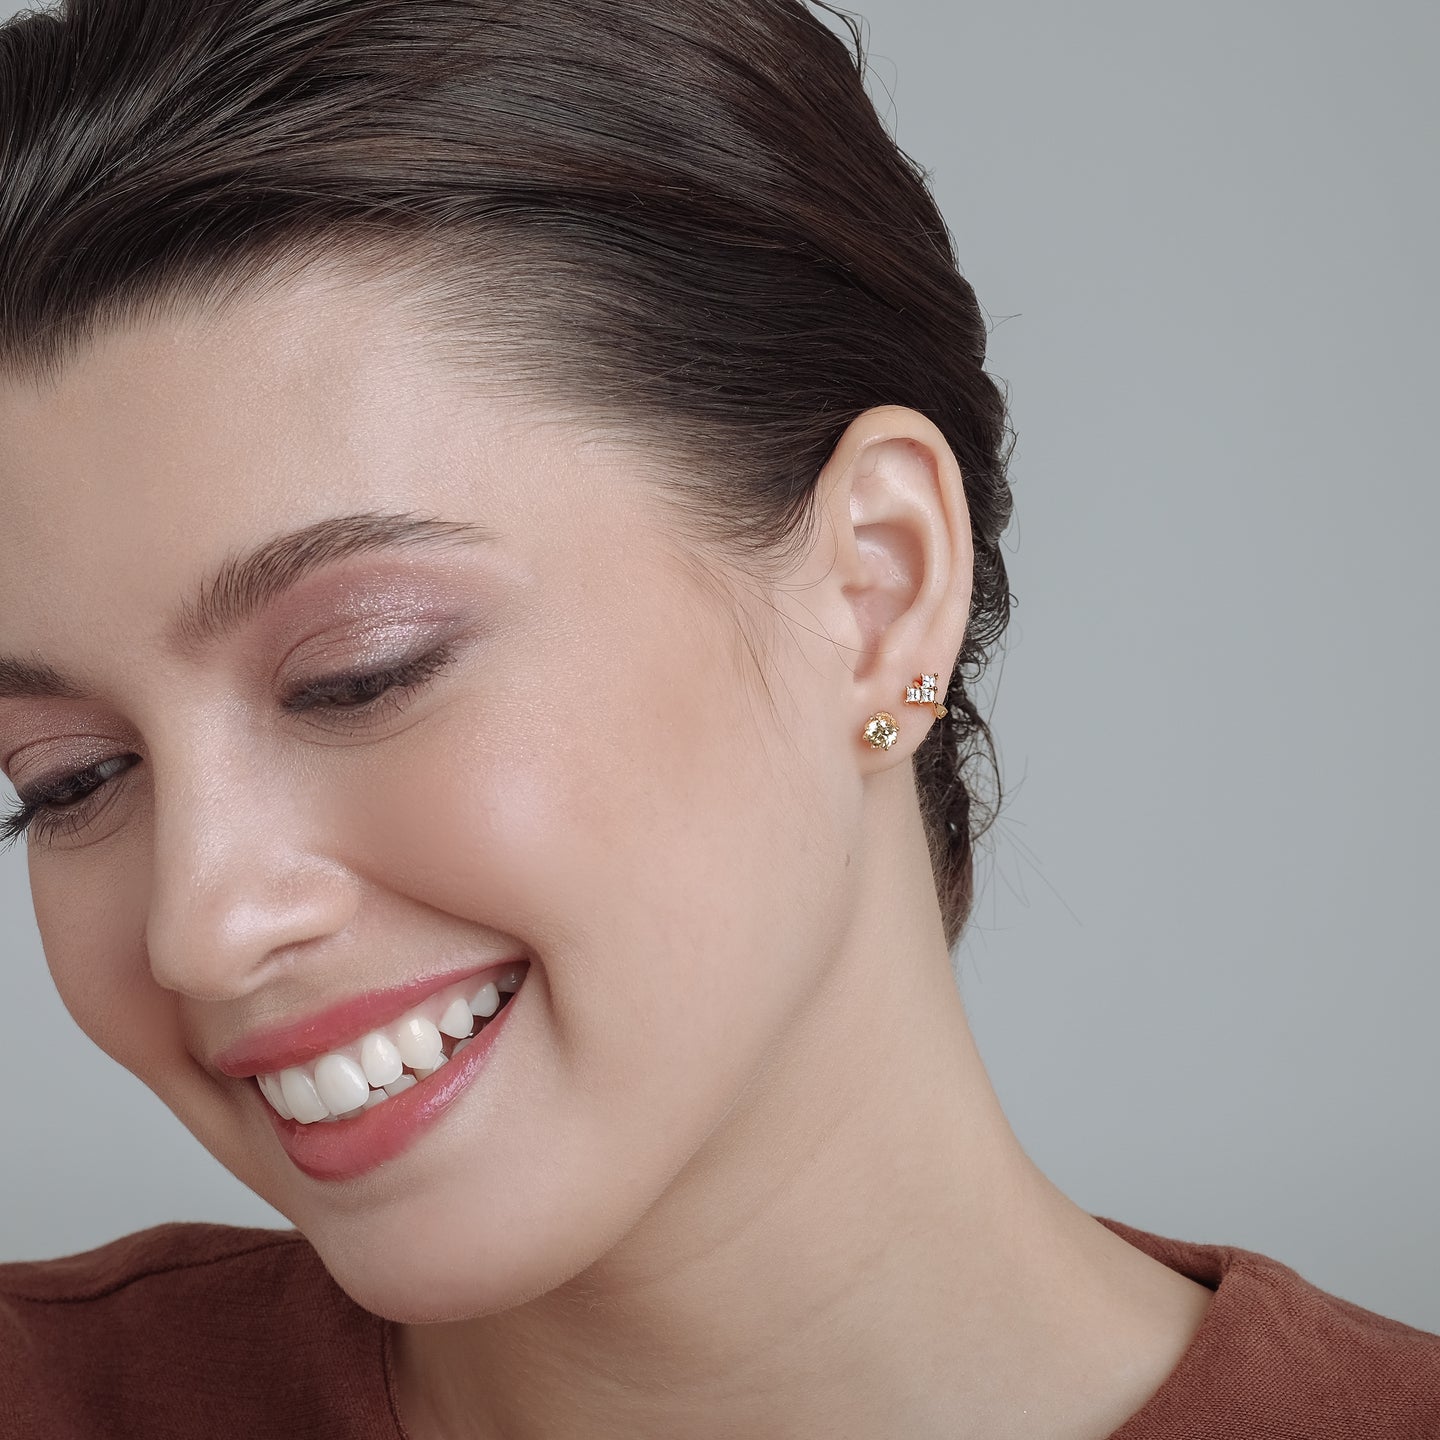 products/bibi-cz-stud-earrings-18k-gold-vermeil-3.jpg